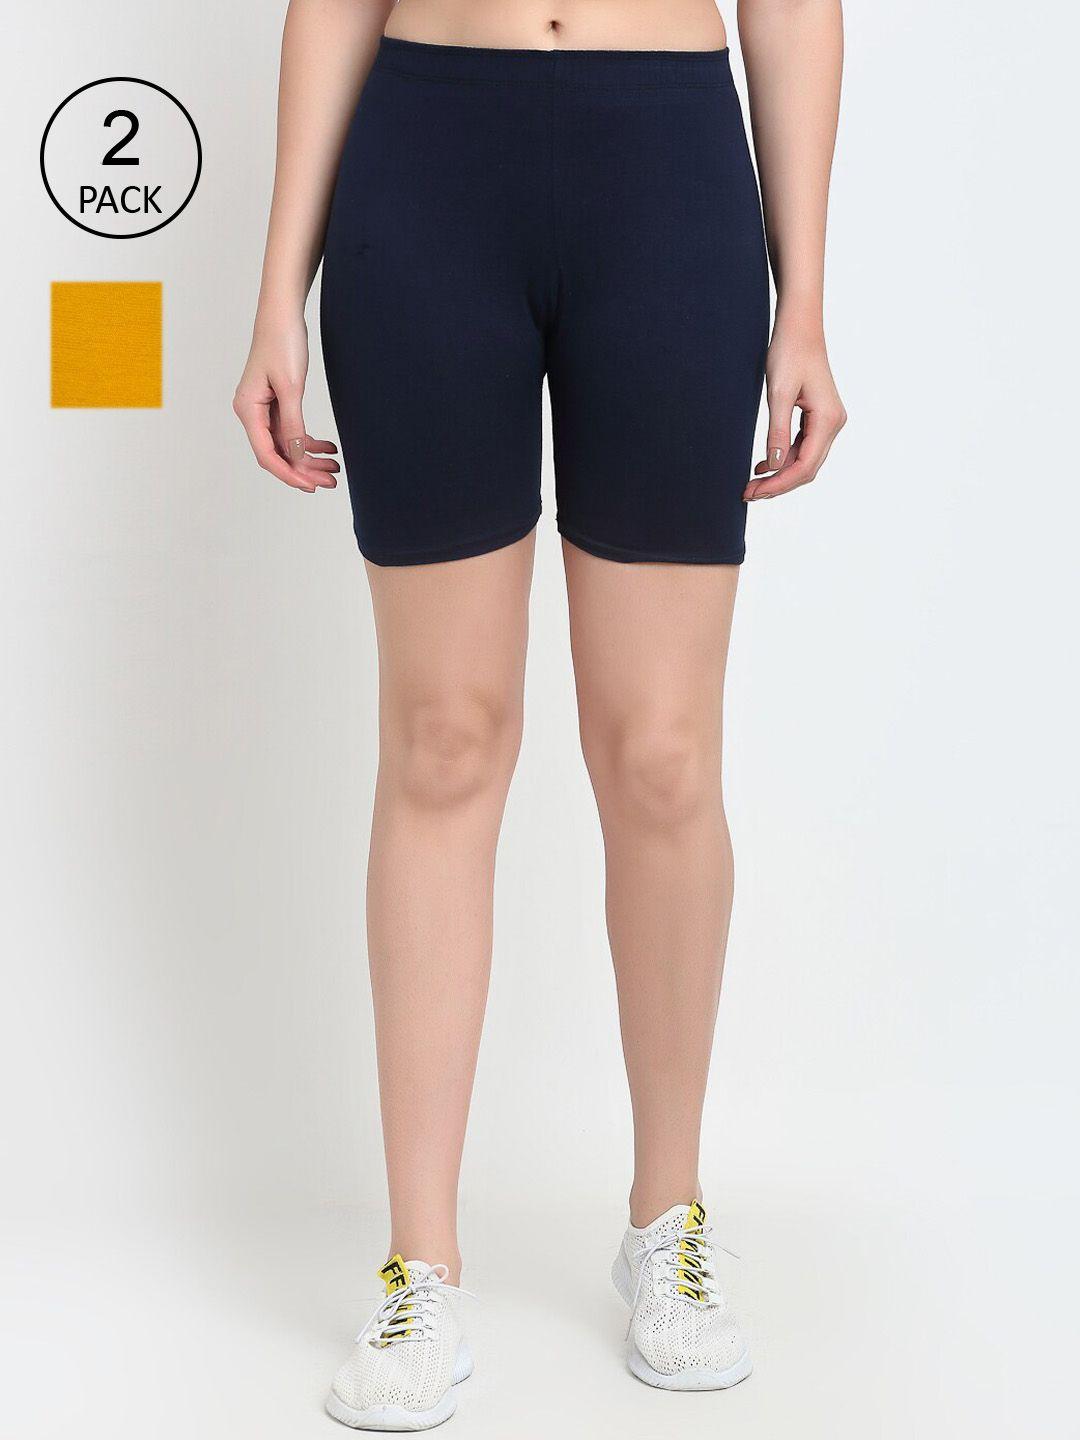 gracit-women-set-of-2-navy-blue-&-yellow-slim-fit-cycling-sports-shorts